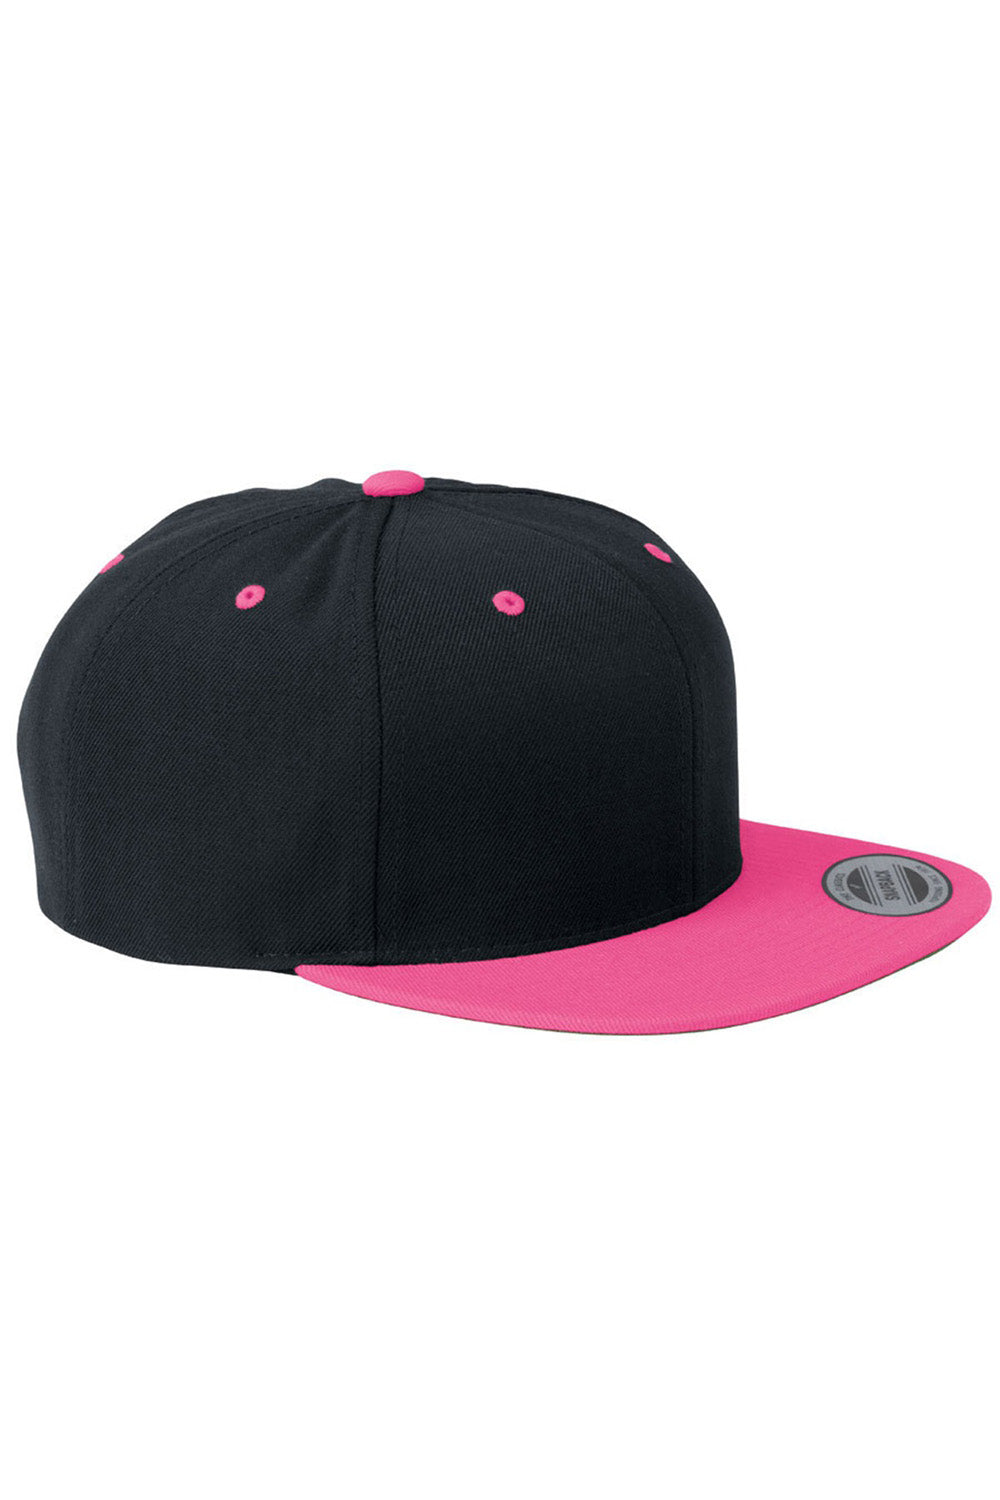 Yupoong 6089 Mens Adjustable Hat Black/Neon Pink Front